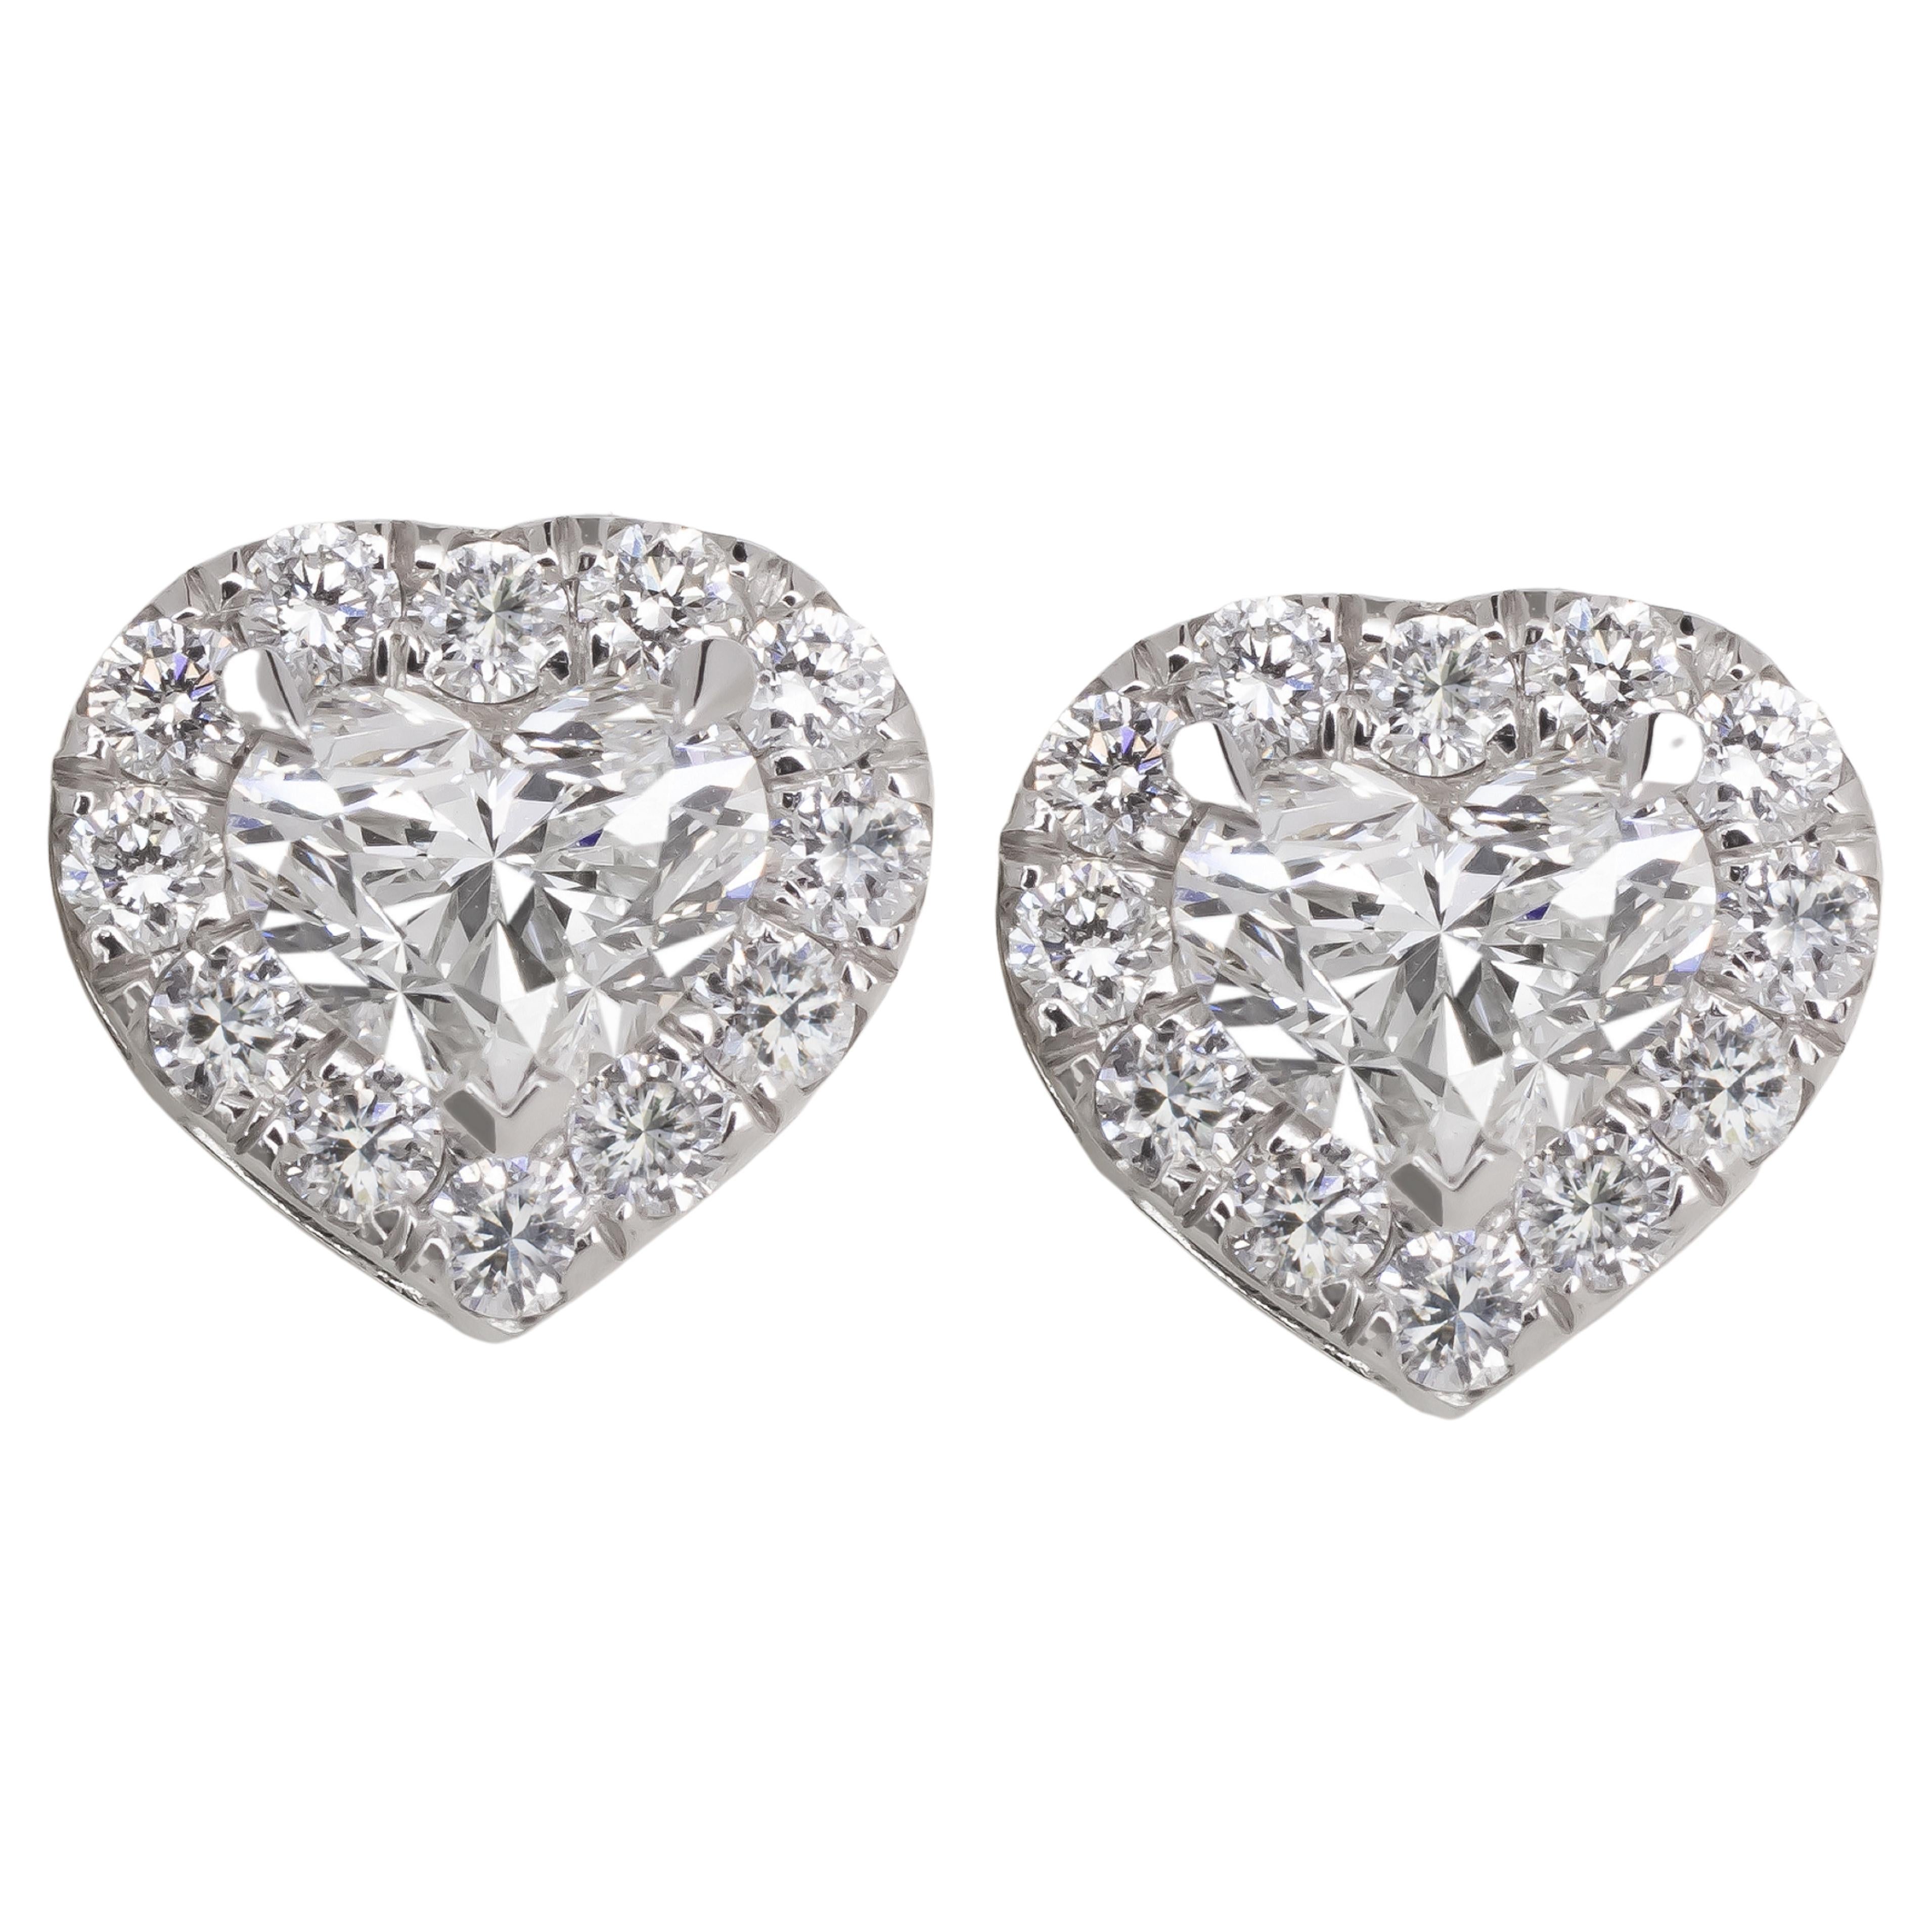 GIA Certified 2 Carat Heart Shape Diamond Stud D/E Color VVS1 Clarity